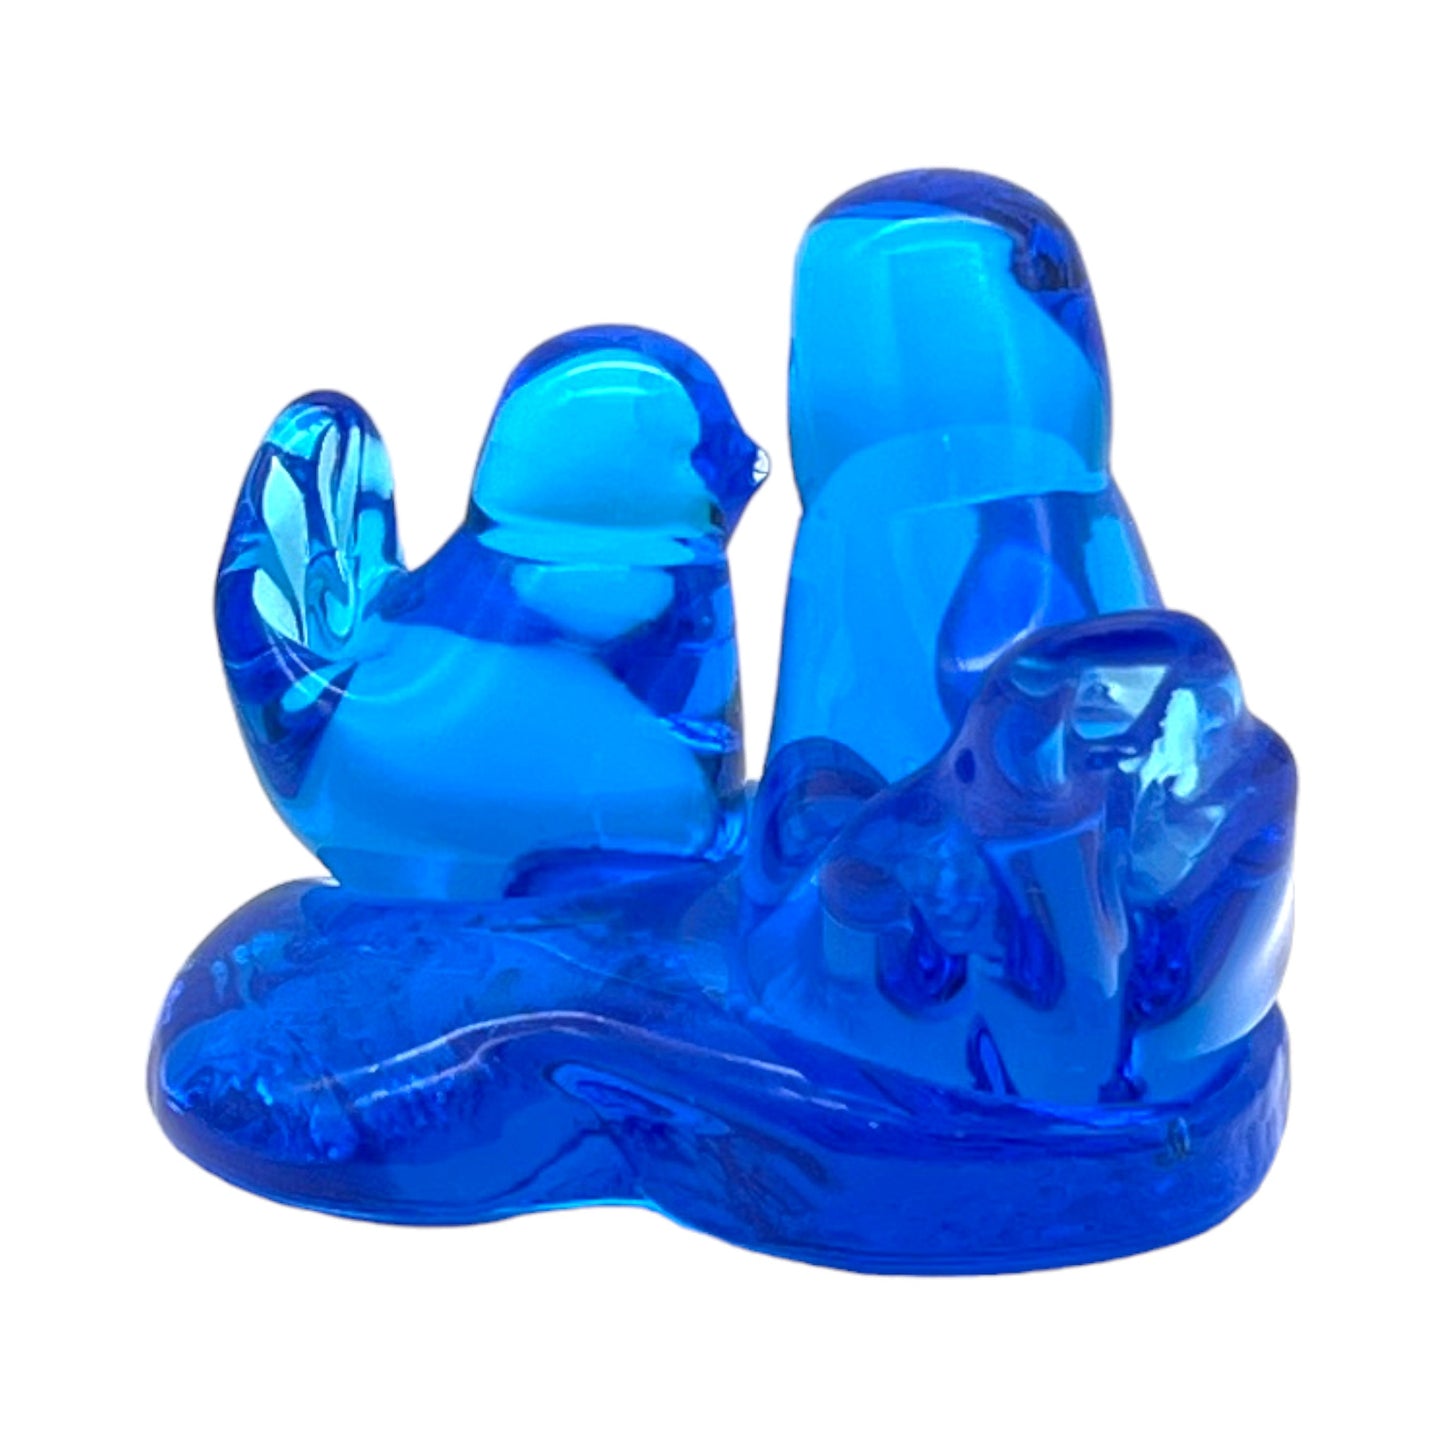 Blown Art Glass - Double Bluebird Of Happiness - Leo Ward Signed - 1993 - 3"